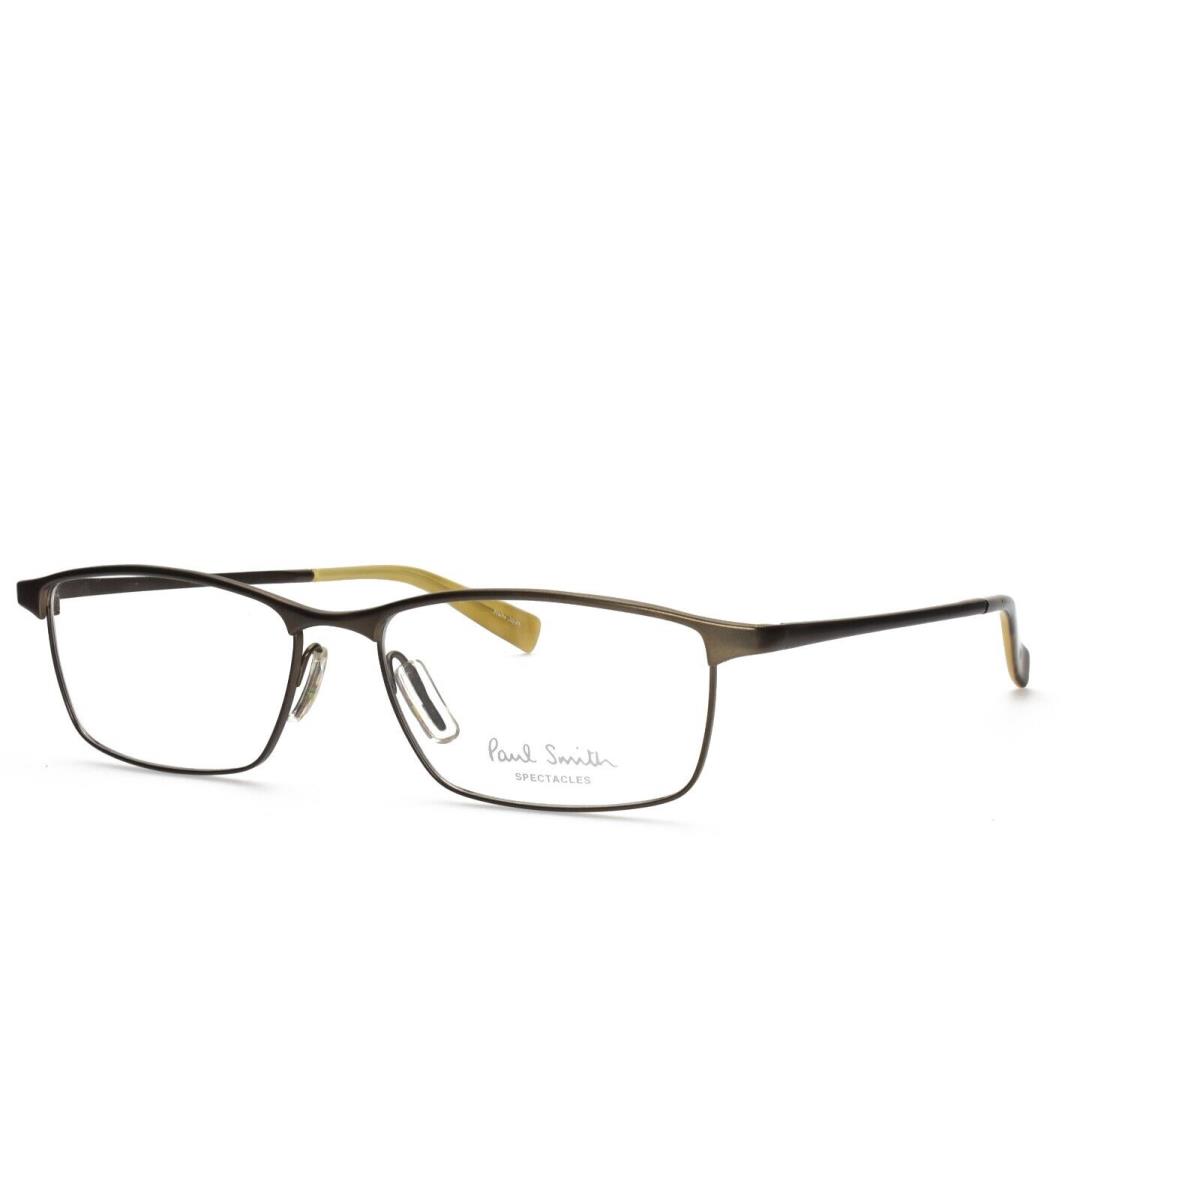 Paul Smith 174 W 52-15-140 Brown Vtg Vintage Eyeglasses Frames